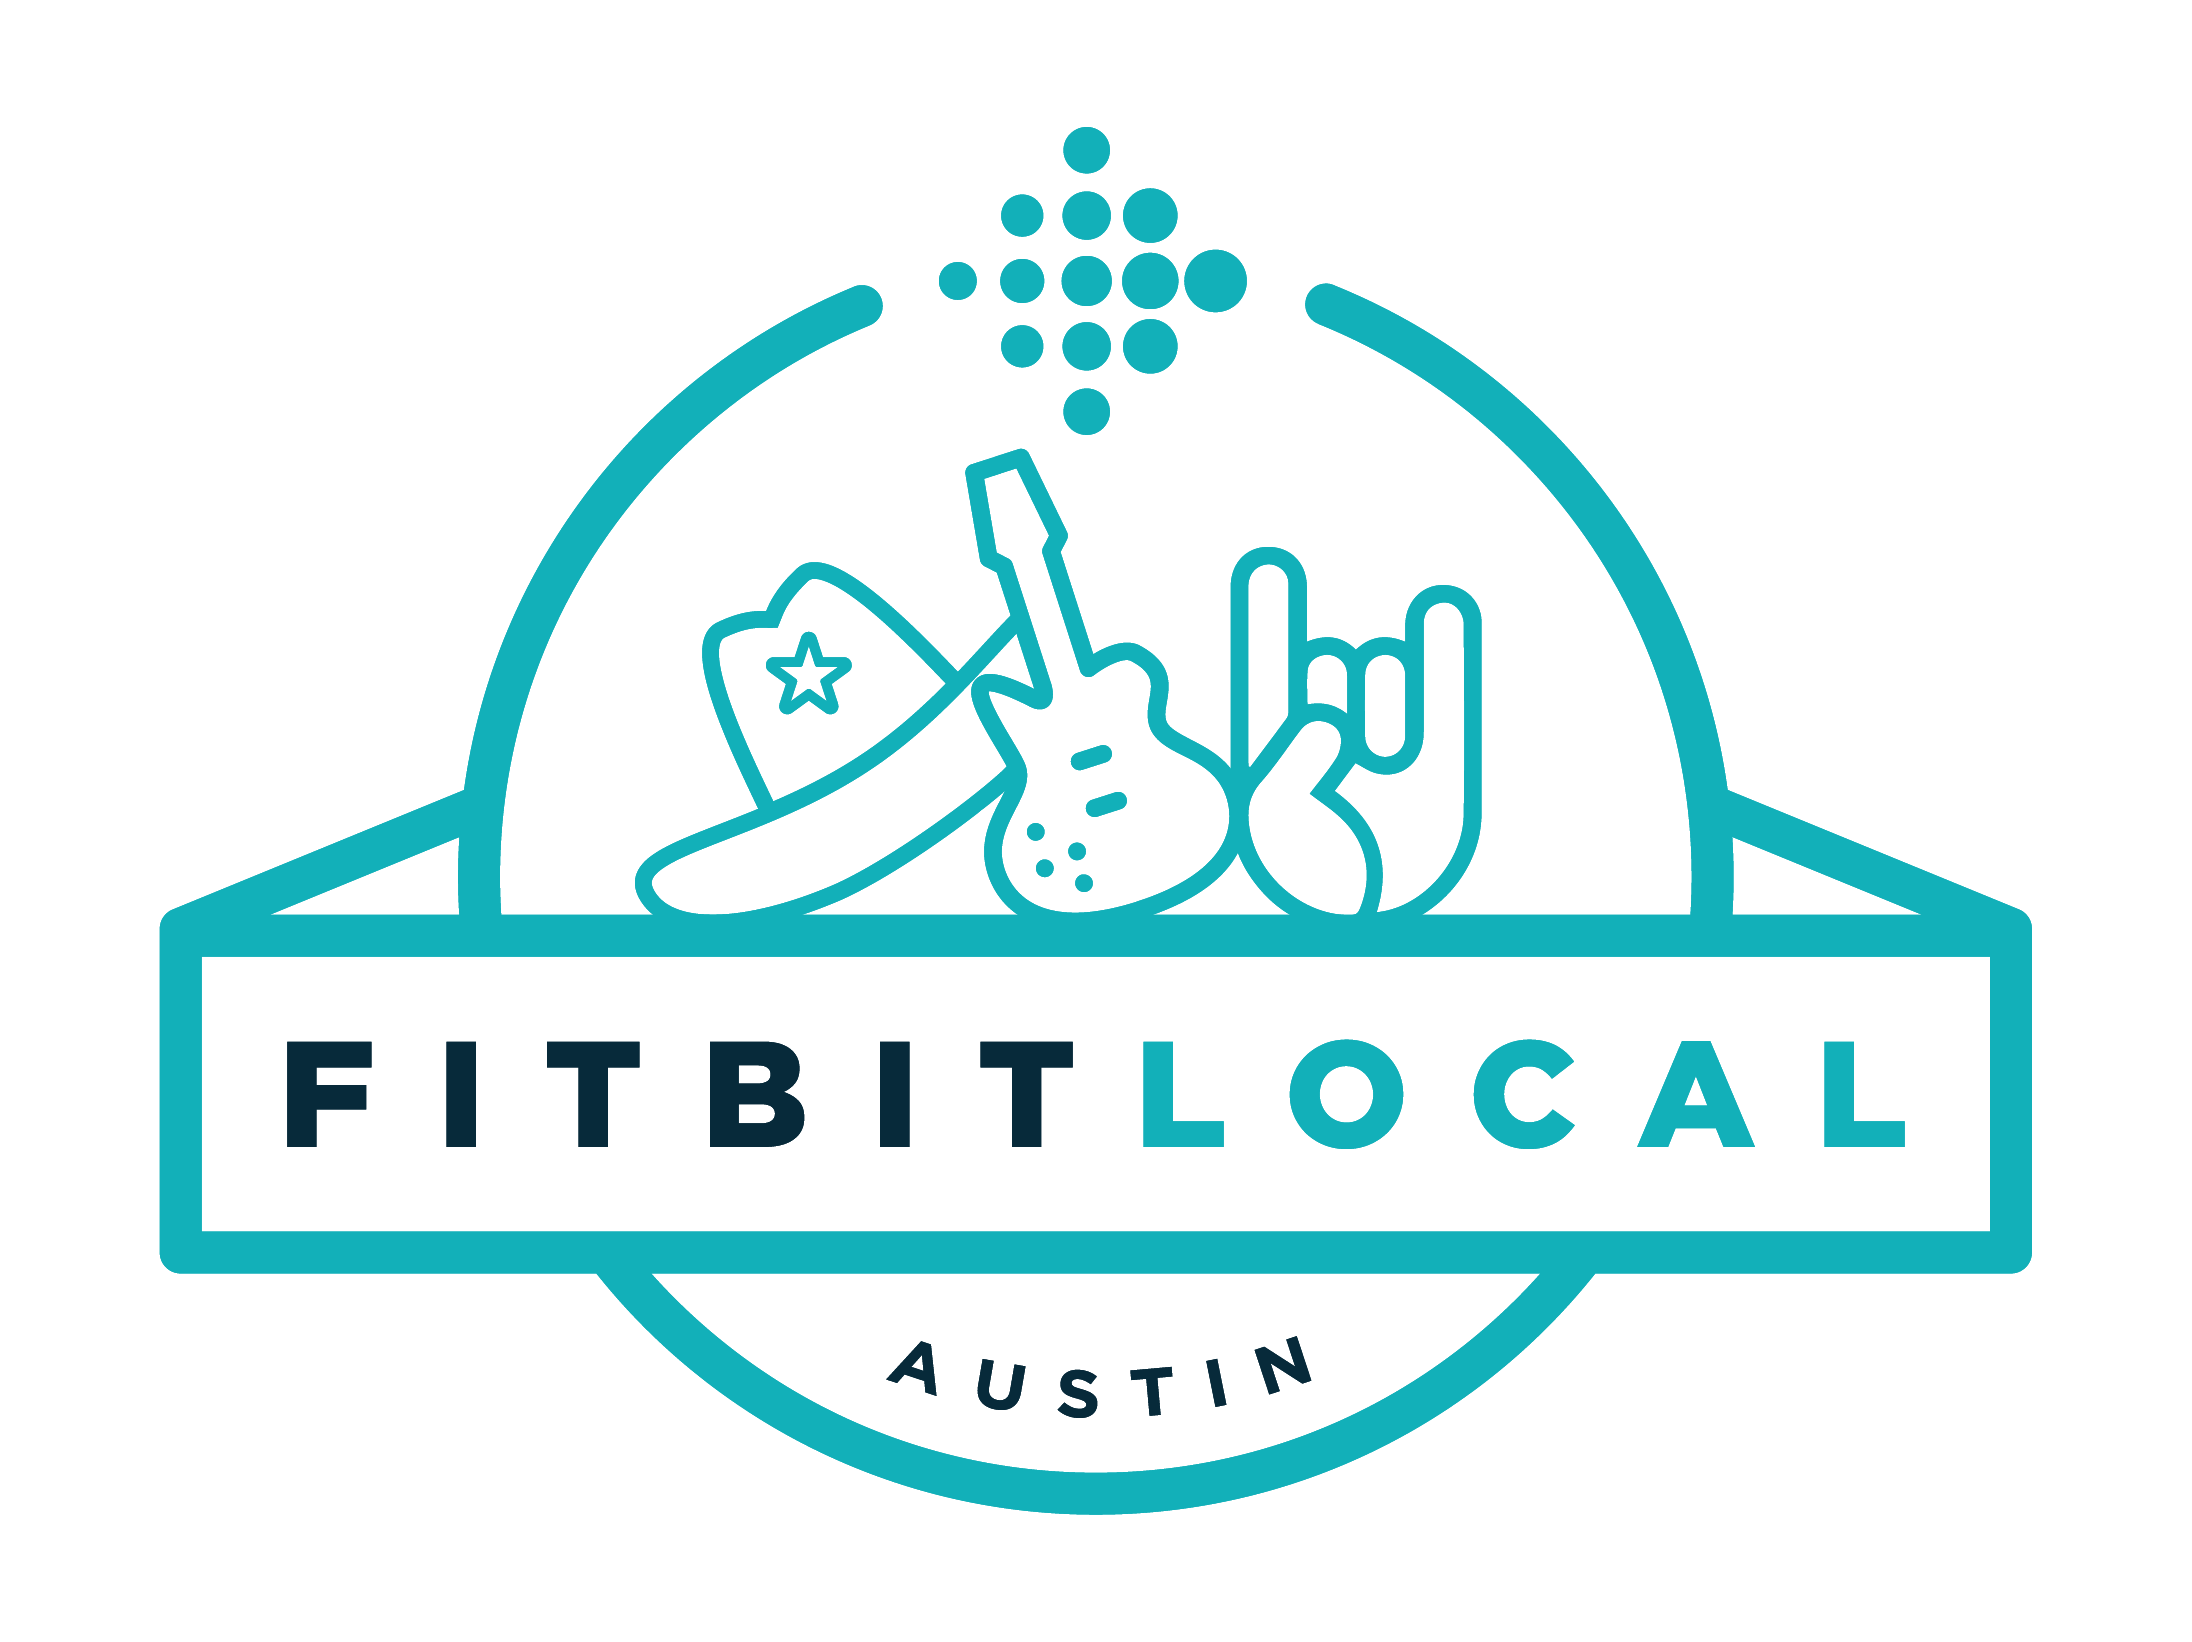 Fitbit Local Austin